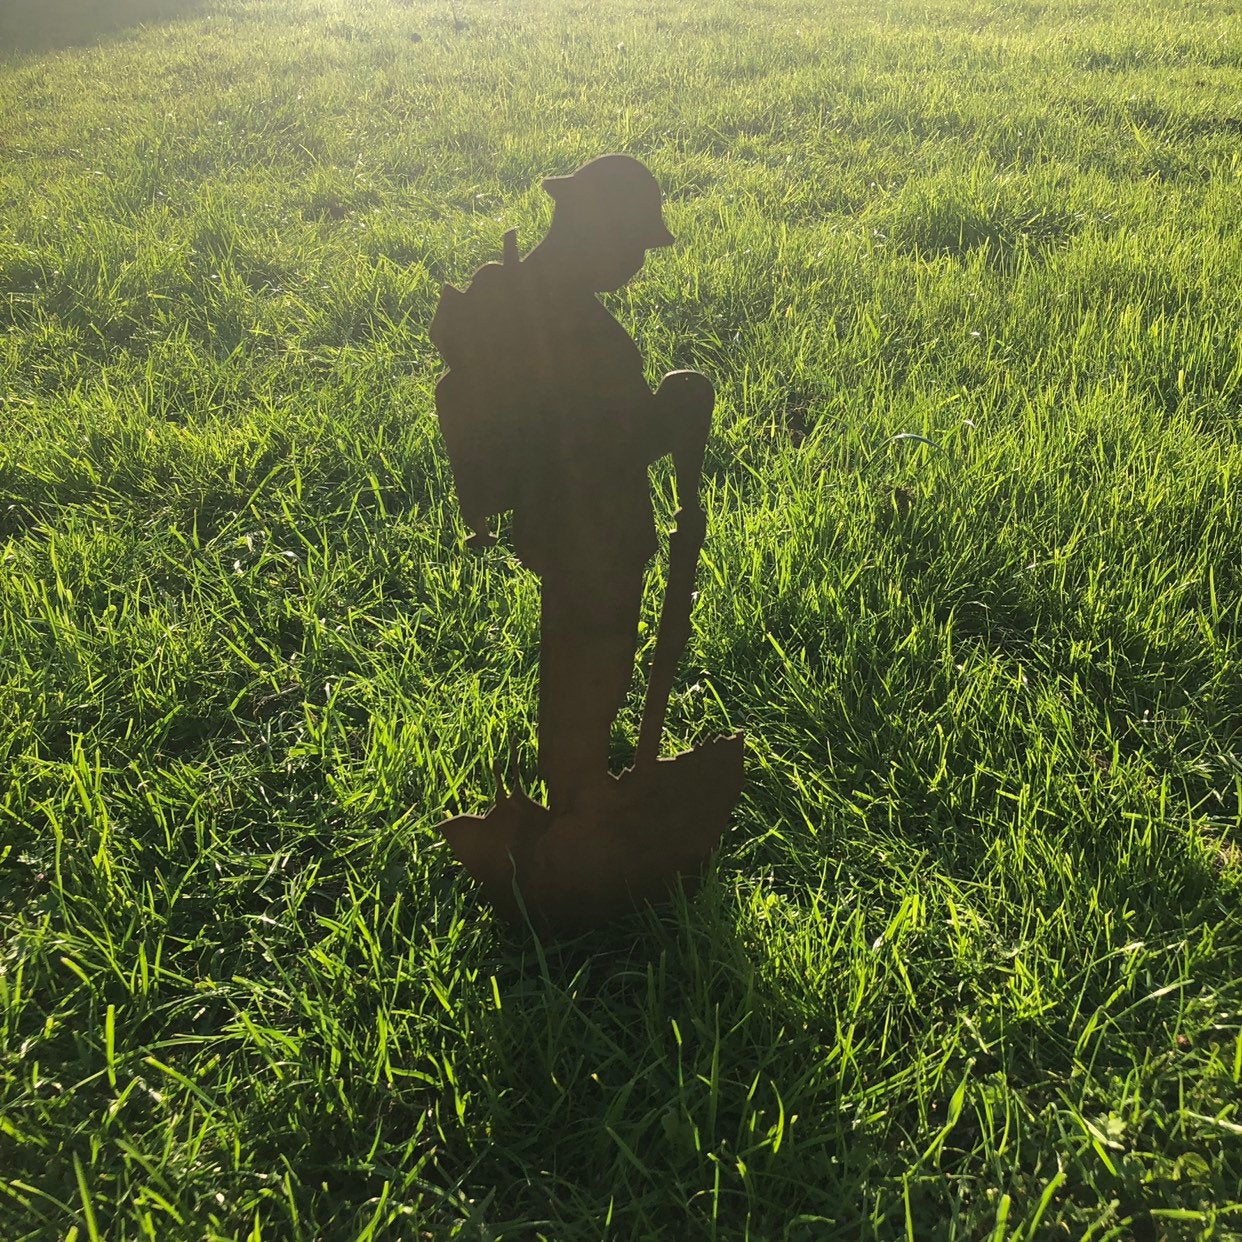 Small Rusty Metal Soldier Garden Statue